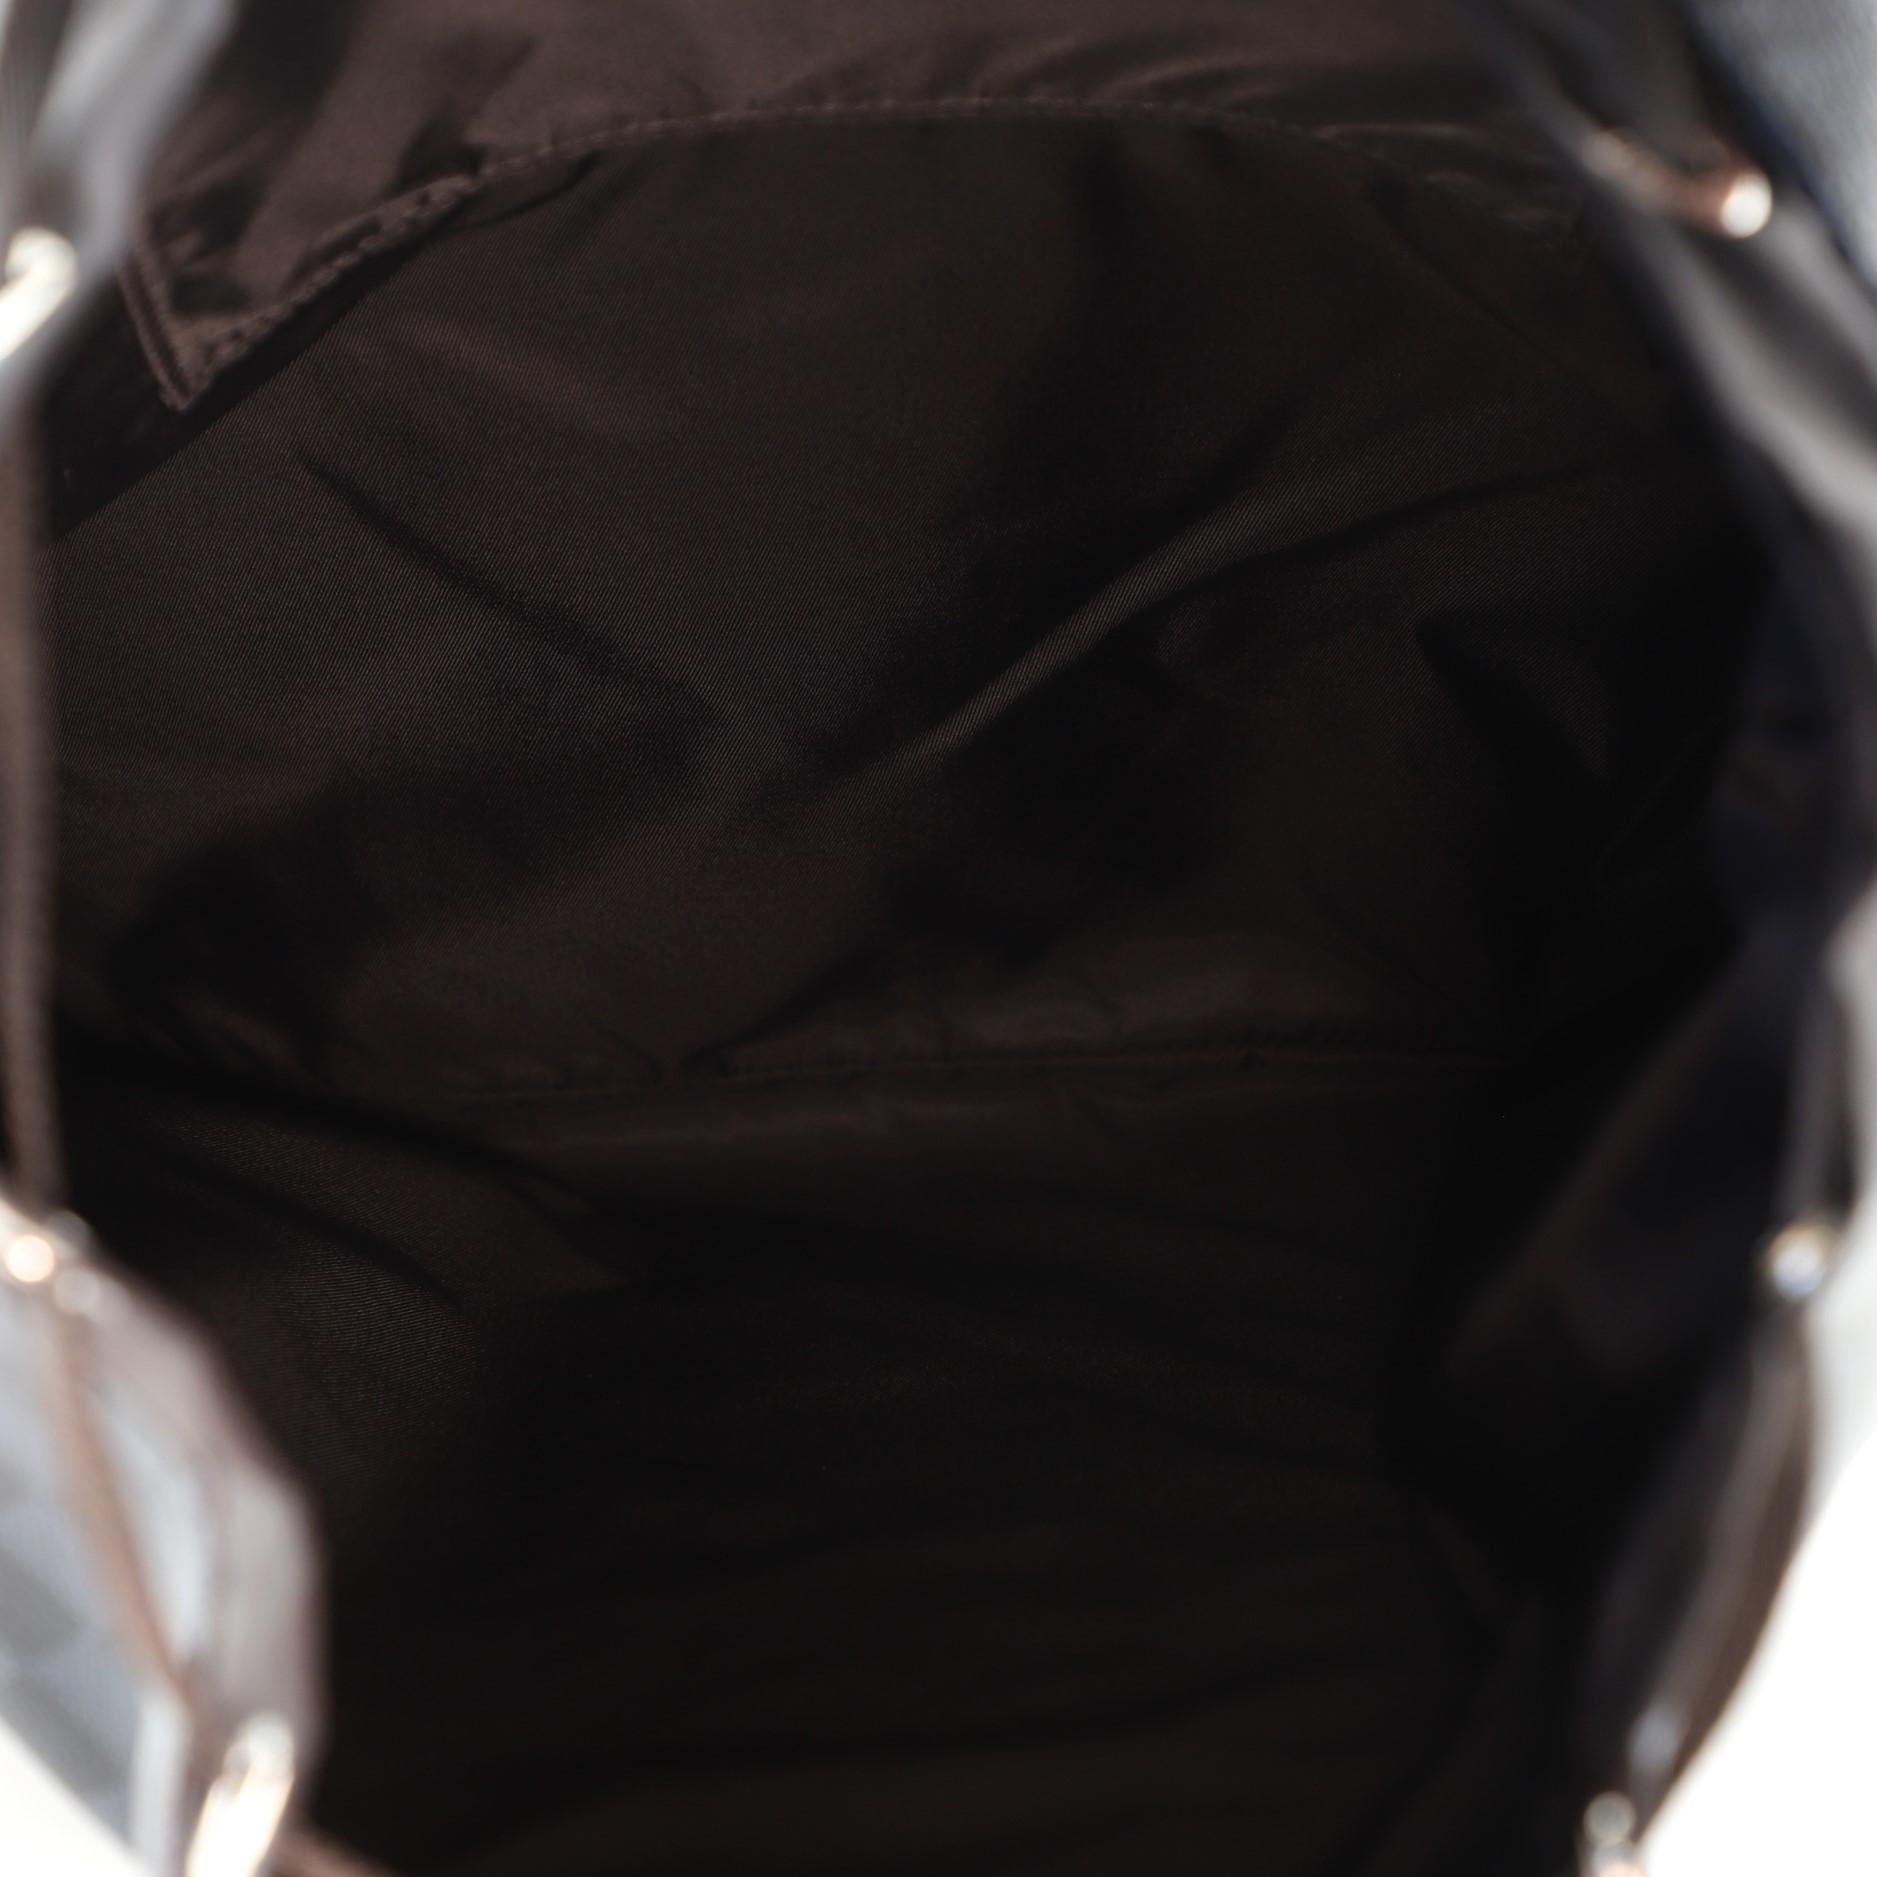 Black Louis Vuitton Drawstring Backpack Limited Edition Damier Cobalt Race